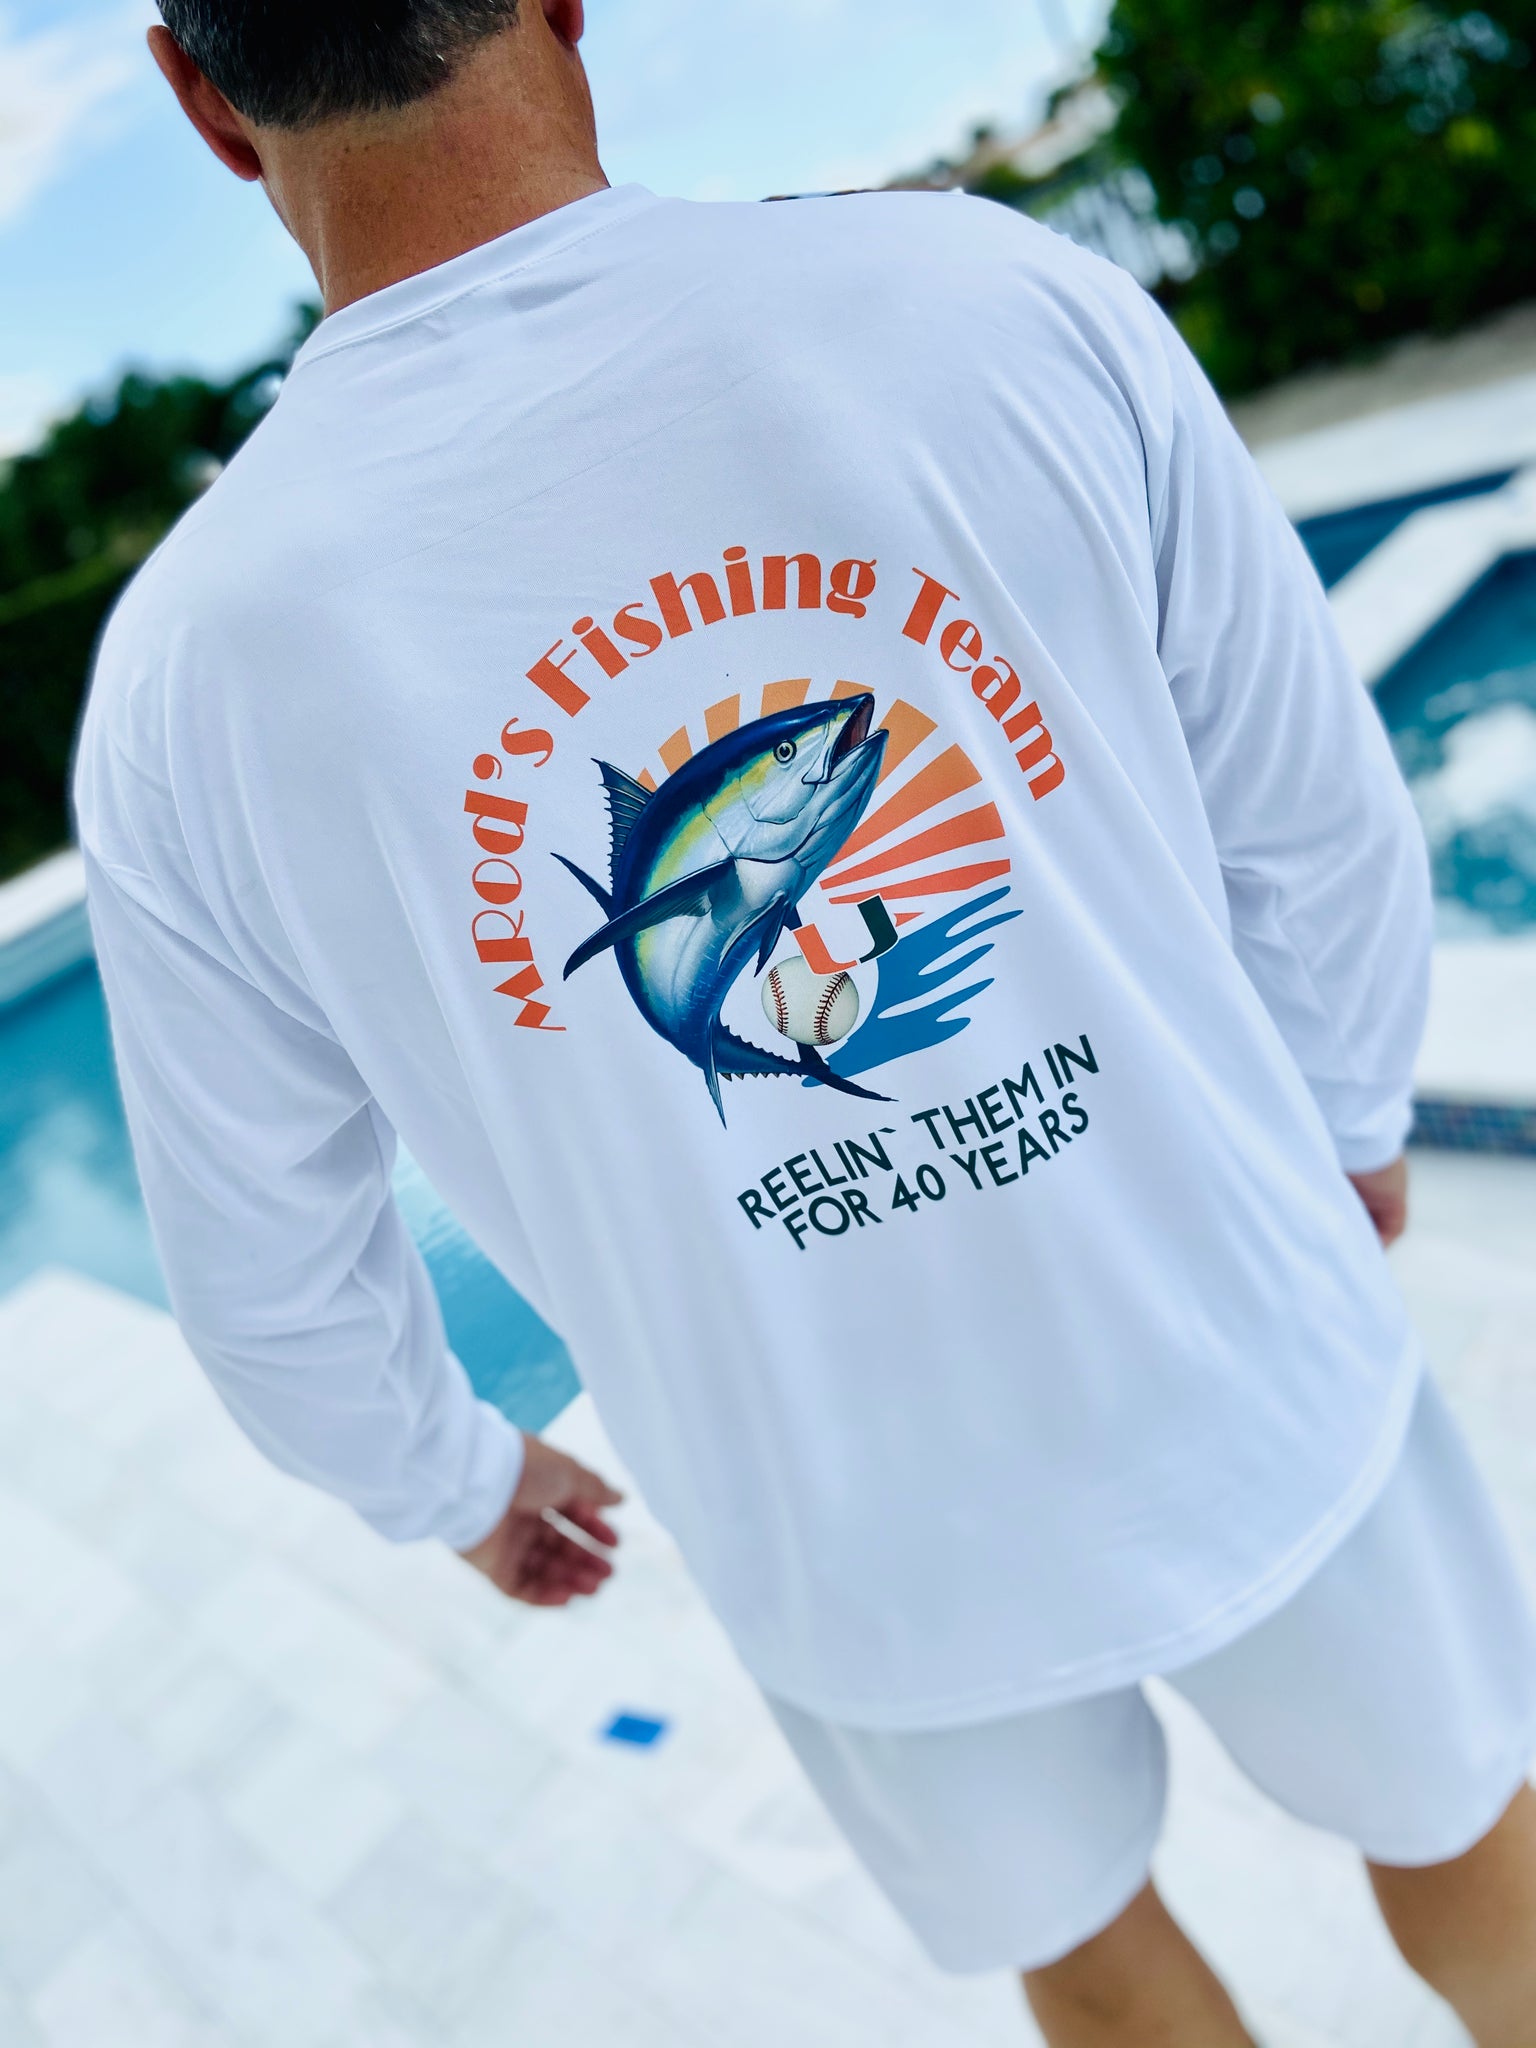 Custom made sublimated fishing jersey